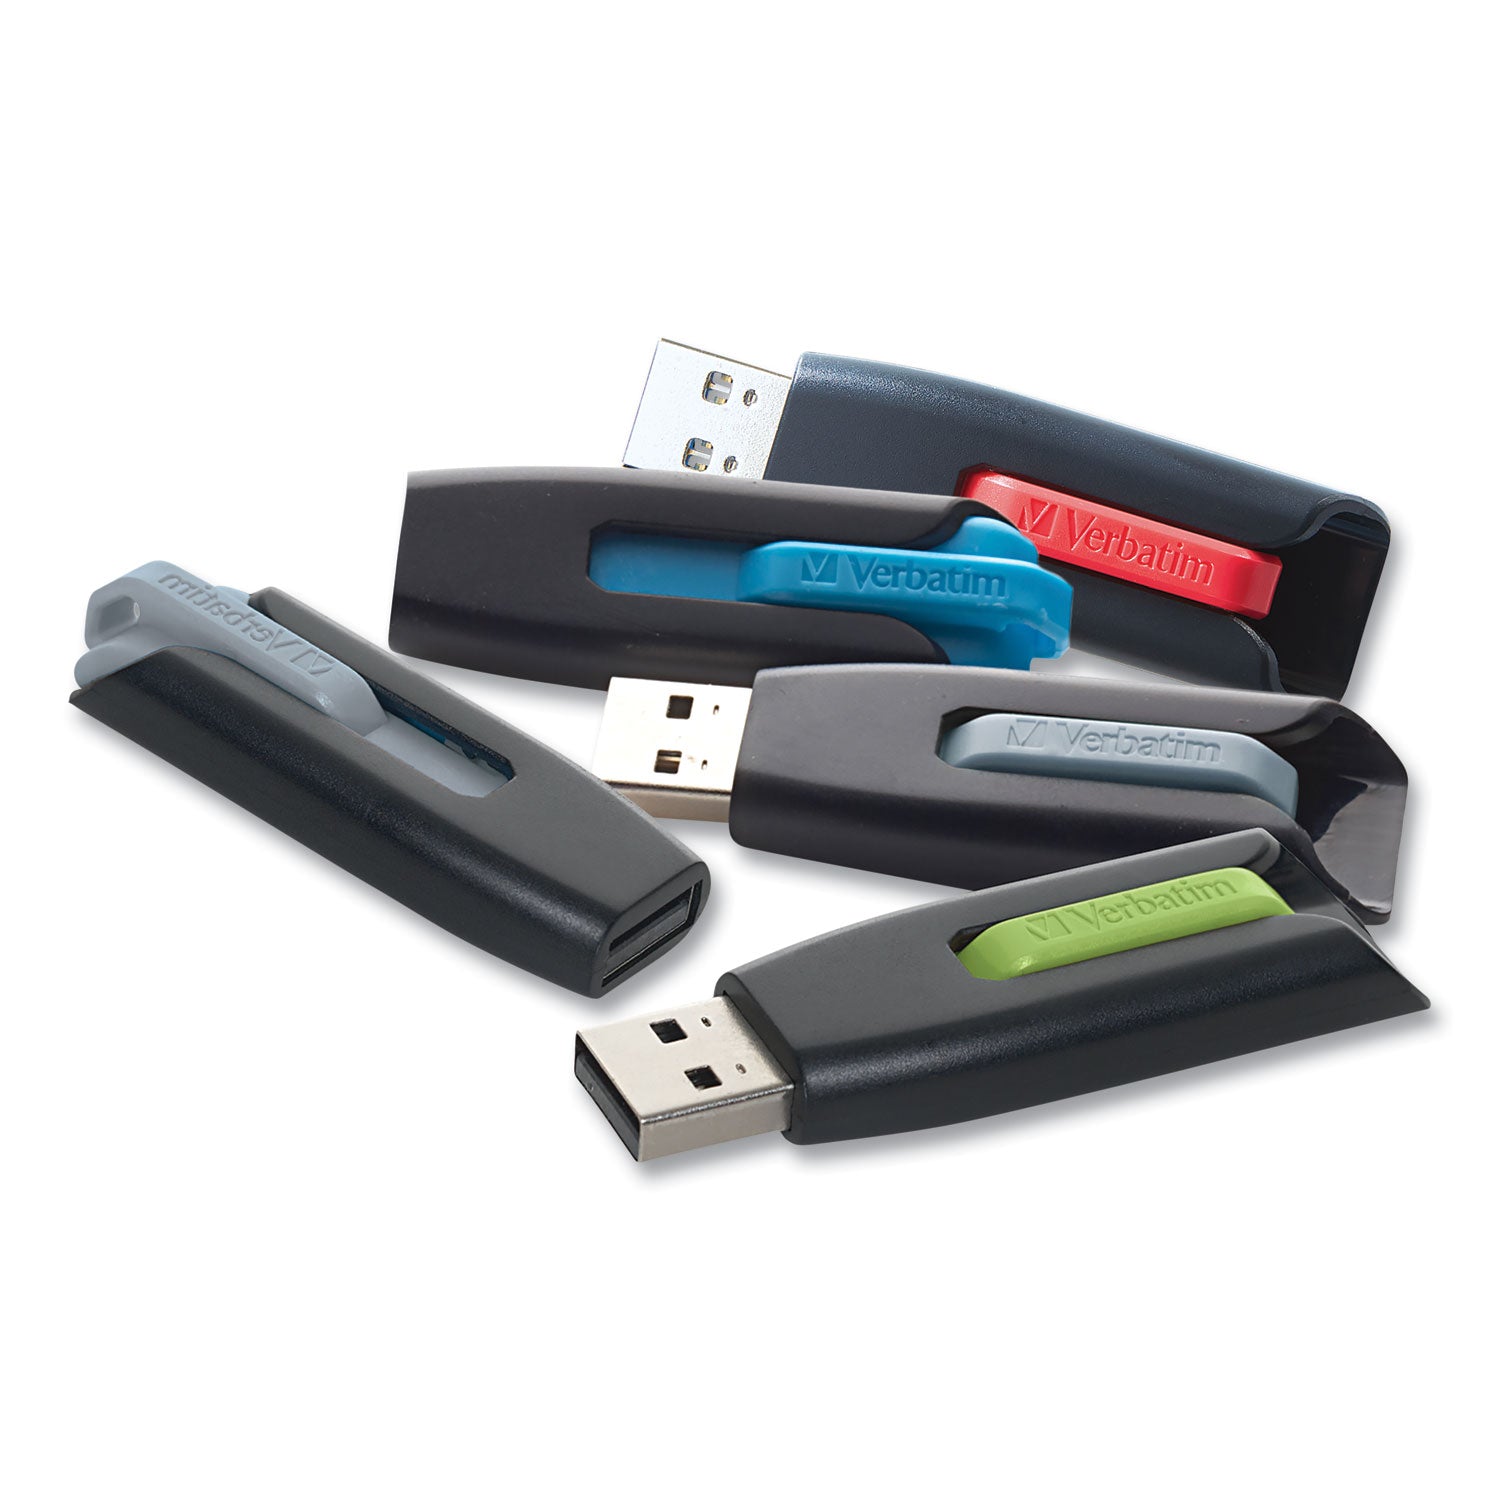 Store 'n' Go V3 USB 3.0 Drive, 64 GB, Black/Gray - 